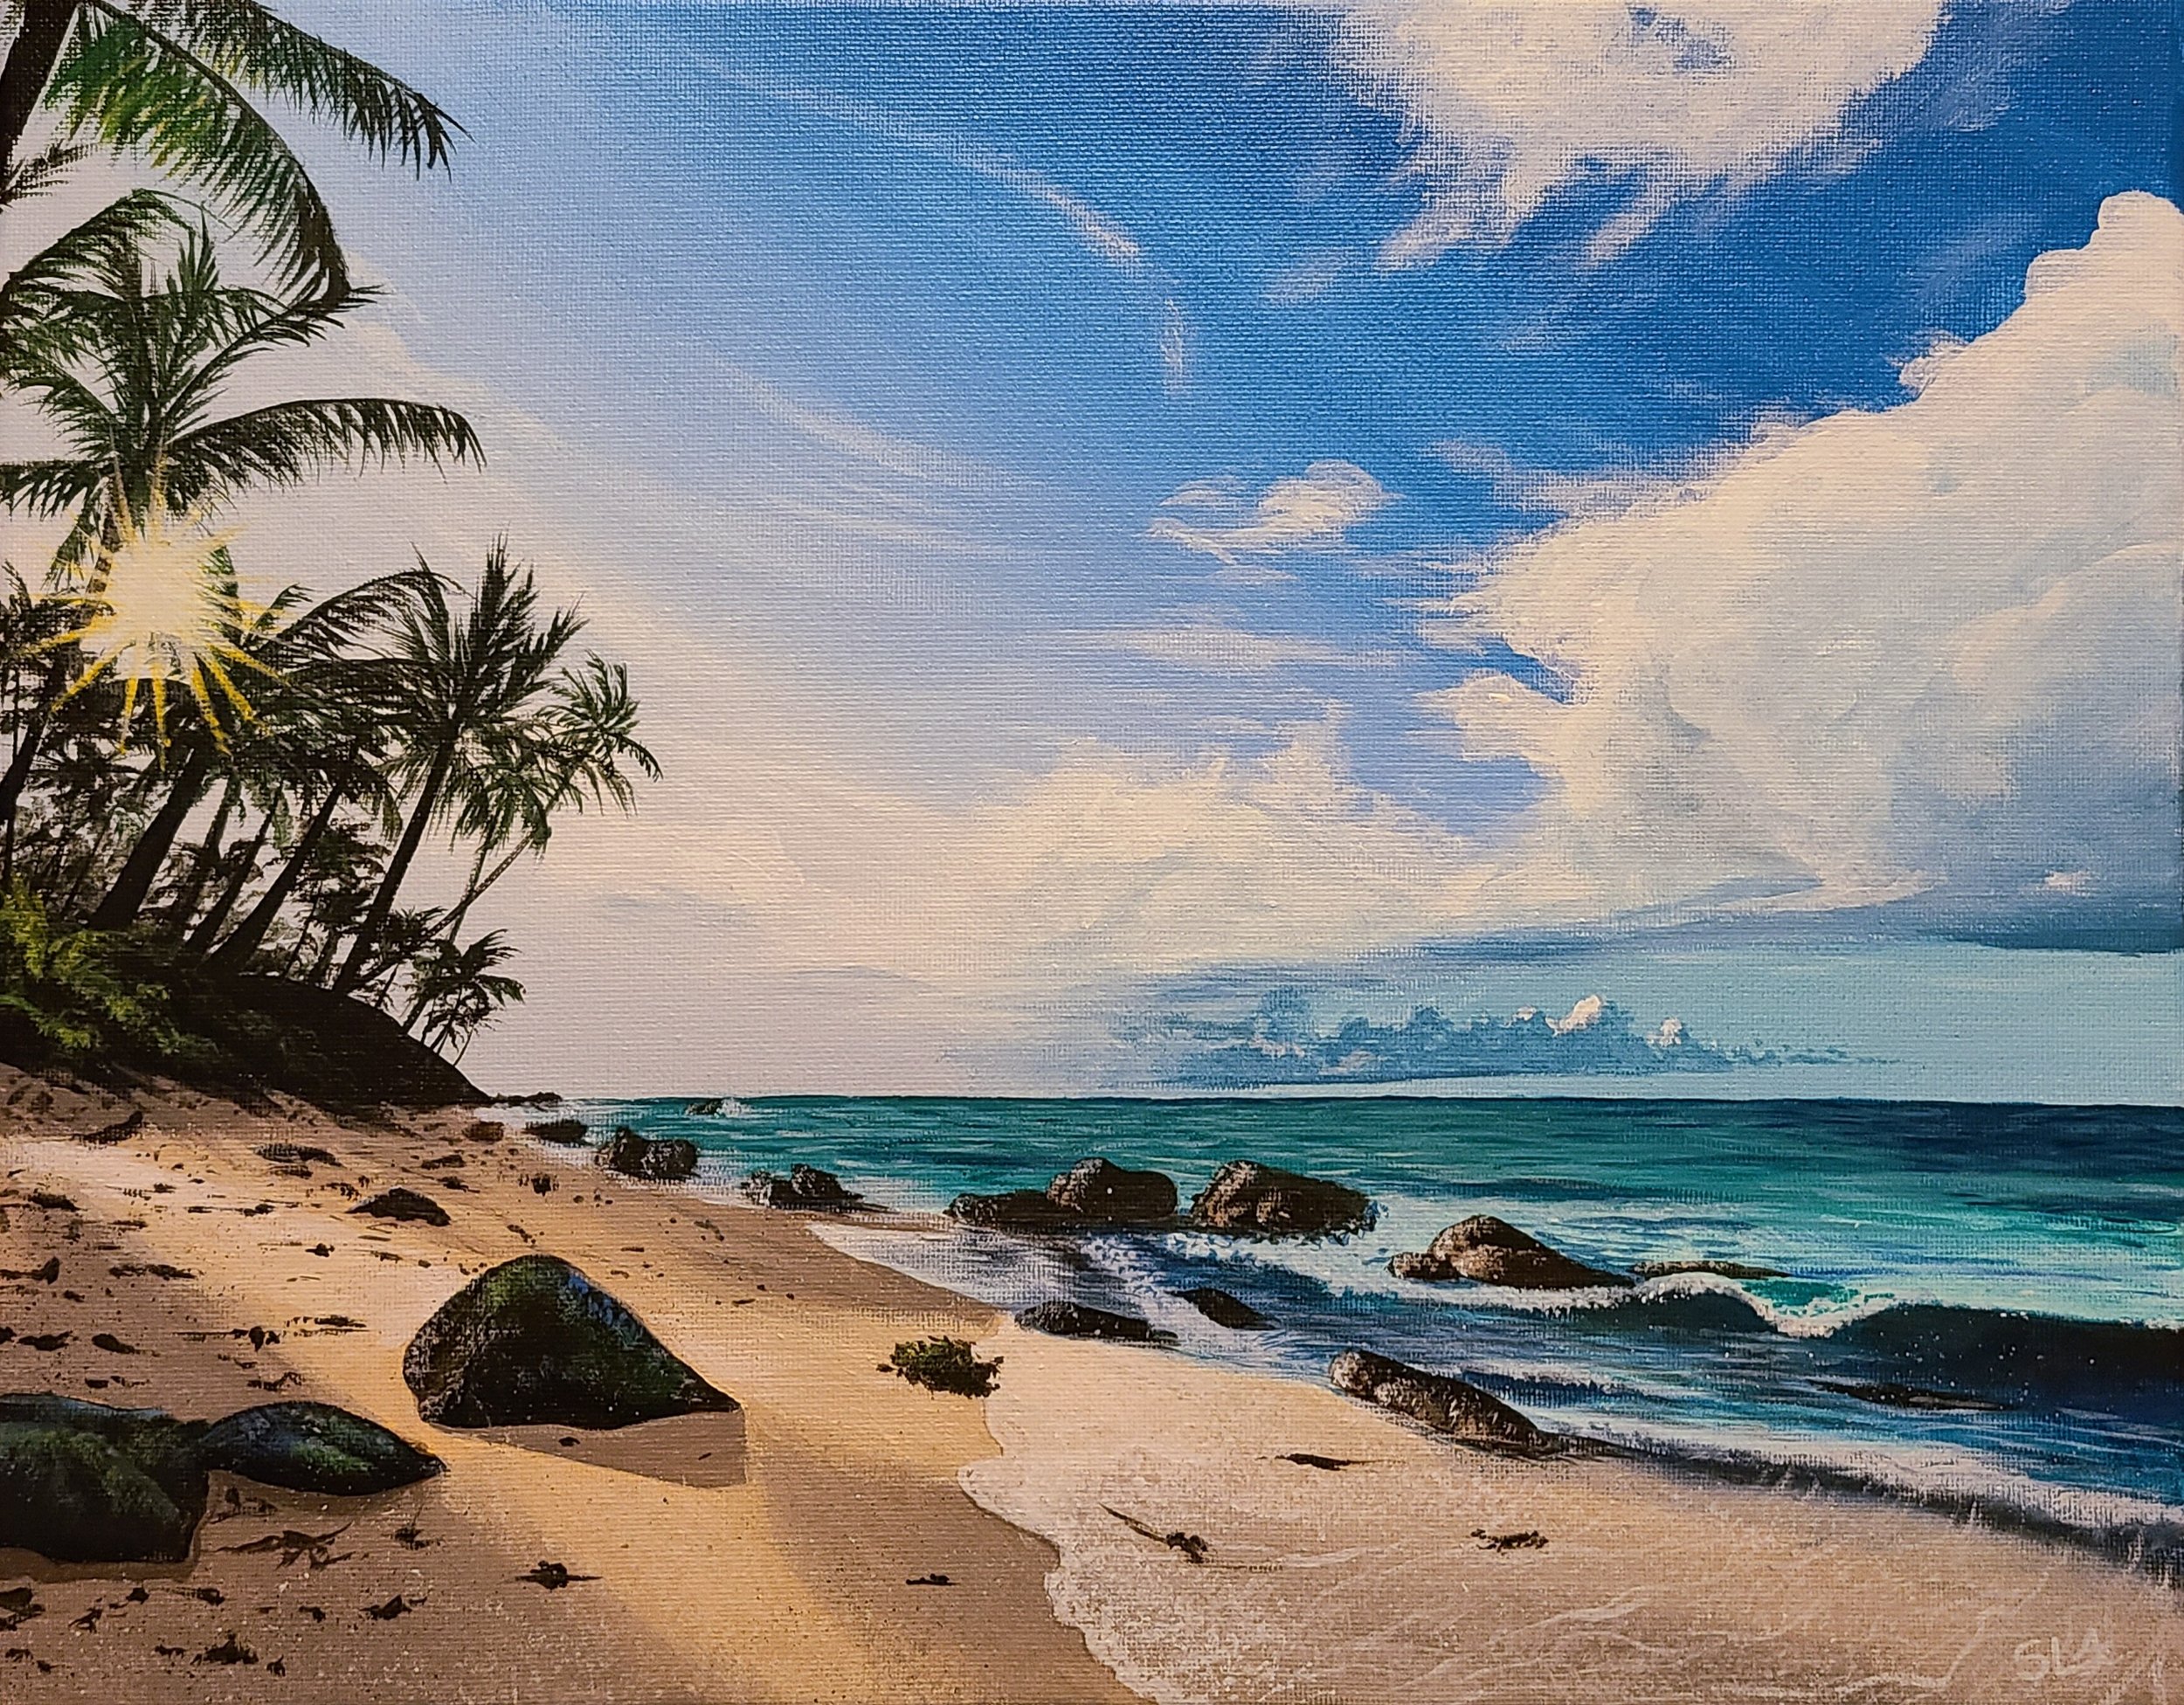 Sunrise Seascape - My Painting (Part 2).jpg